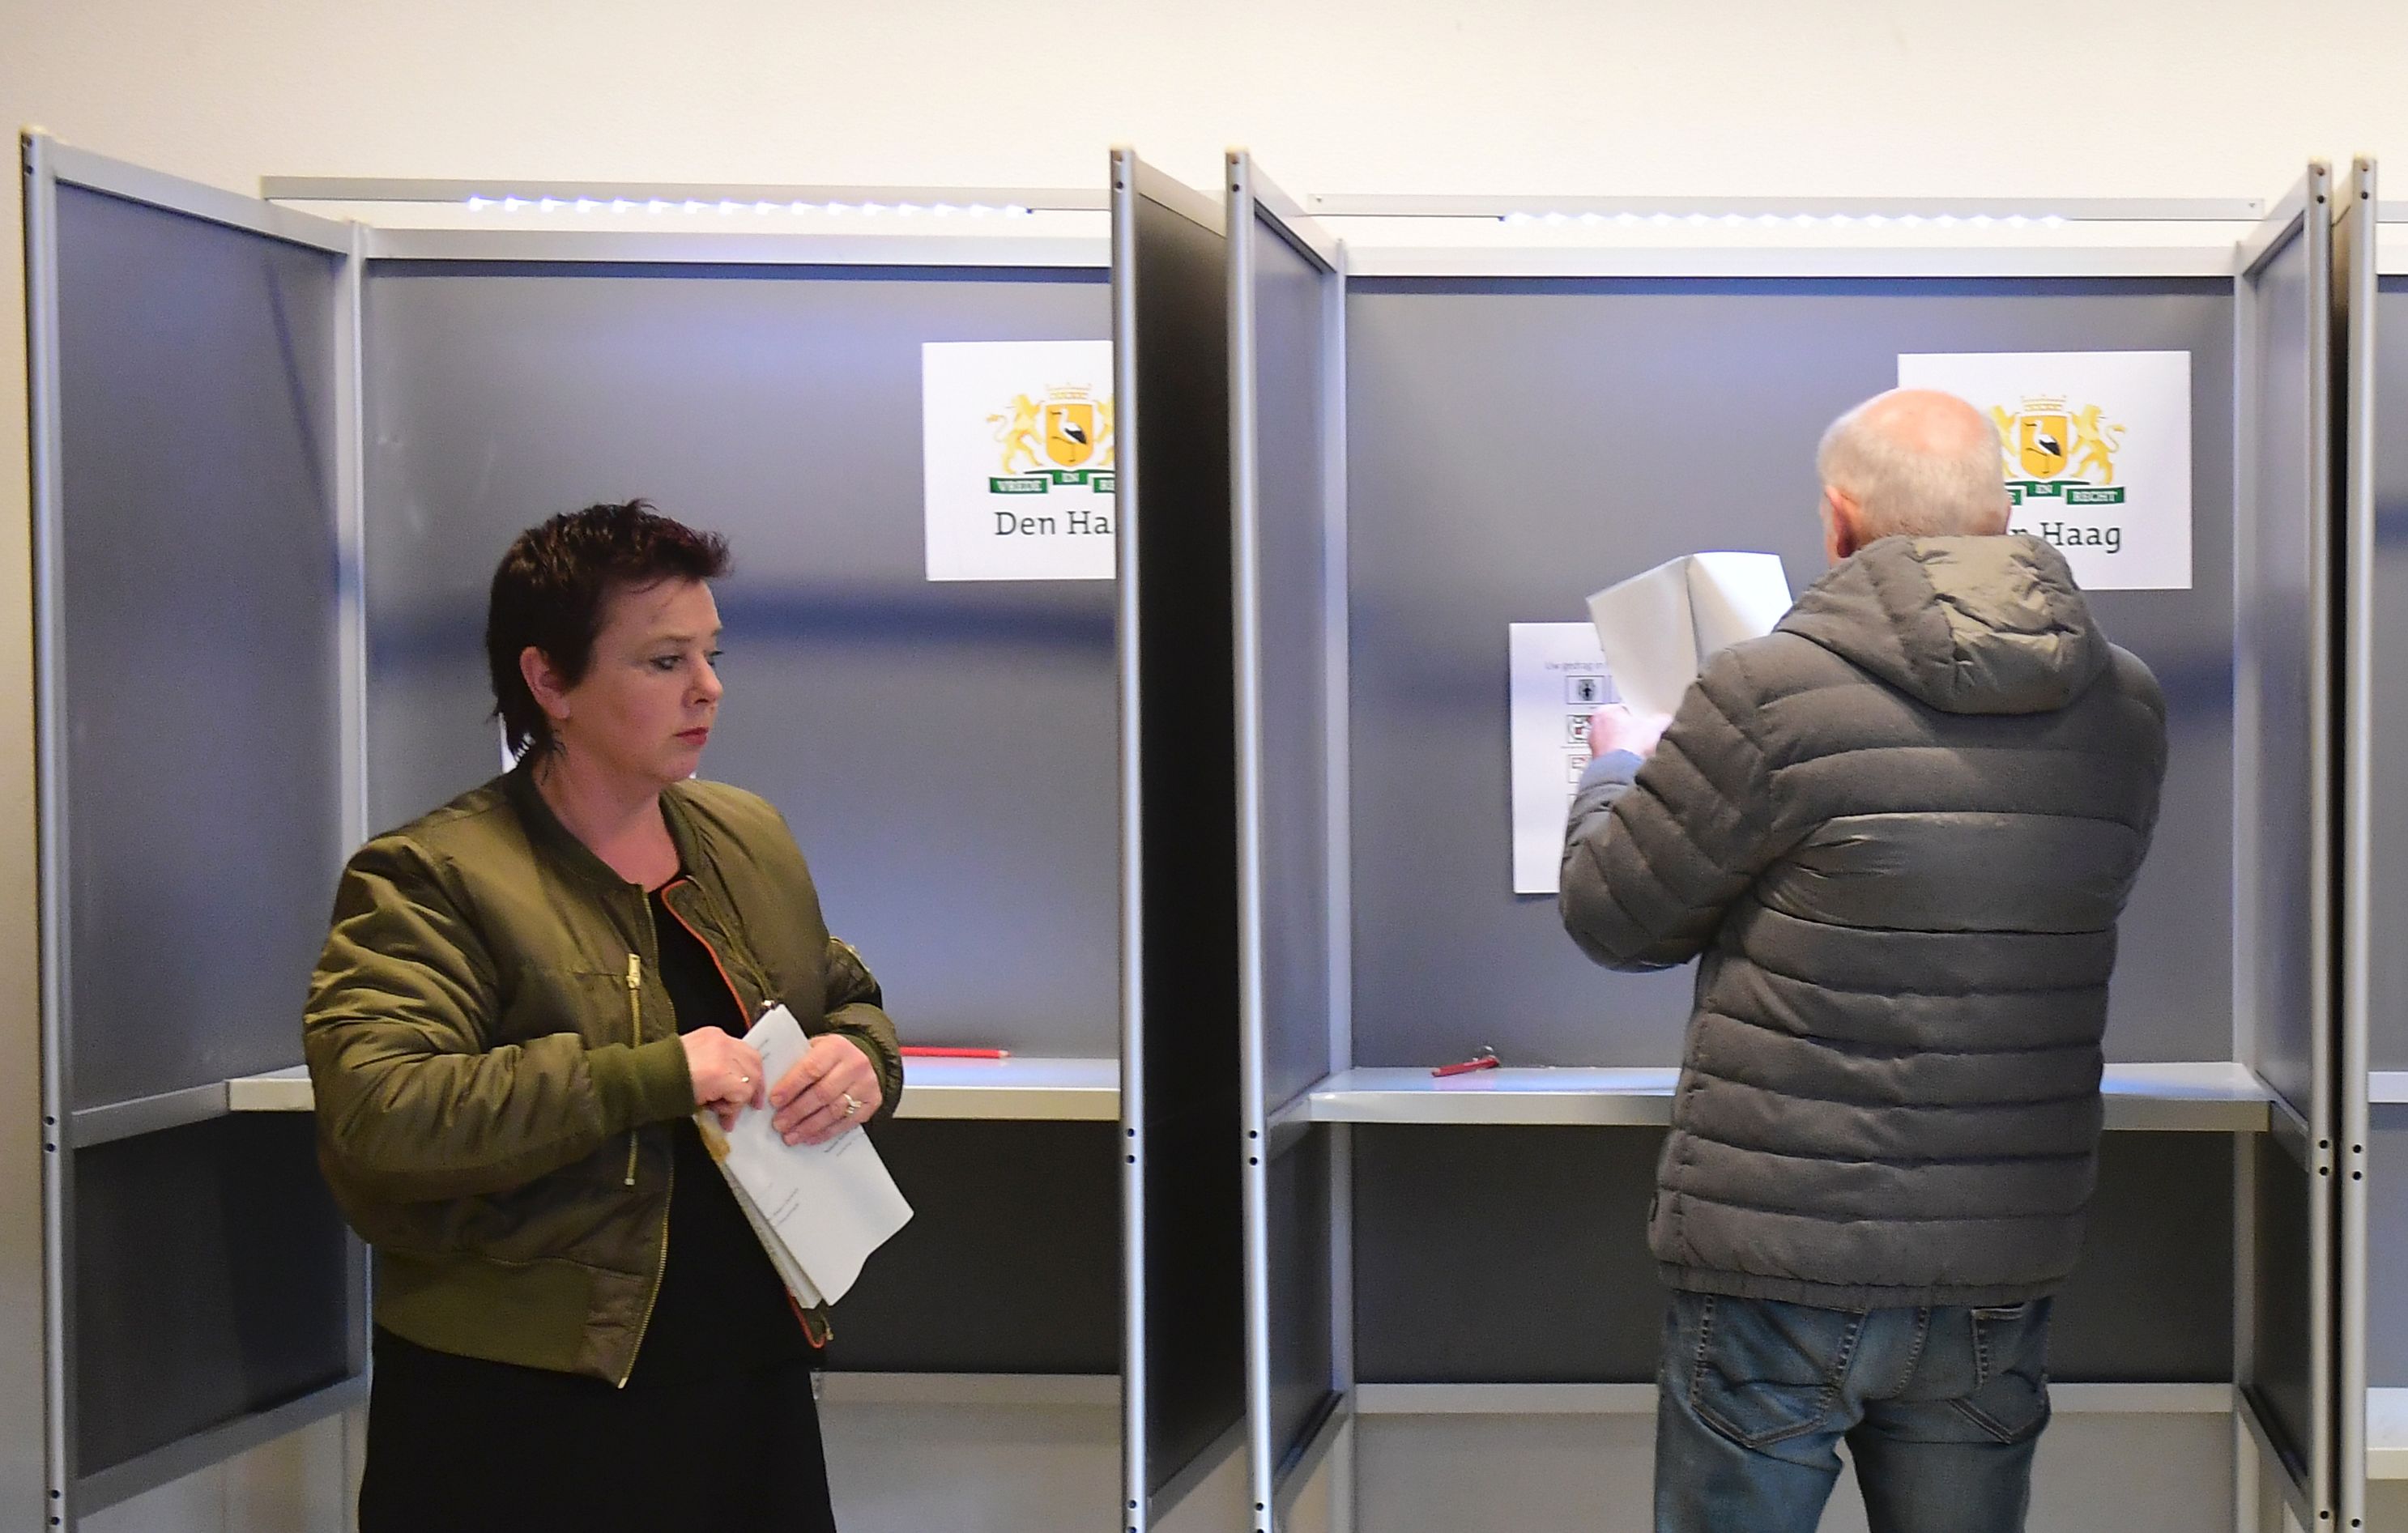 Dutch polls open in test of anti-establishment sentiment in the Netherlands